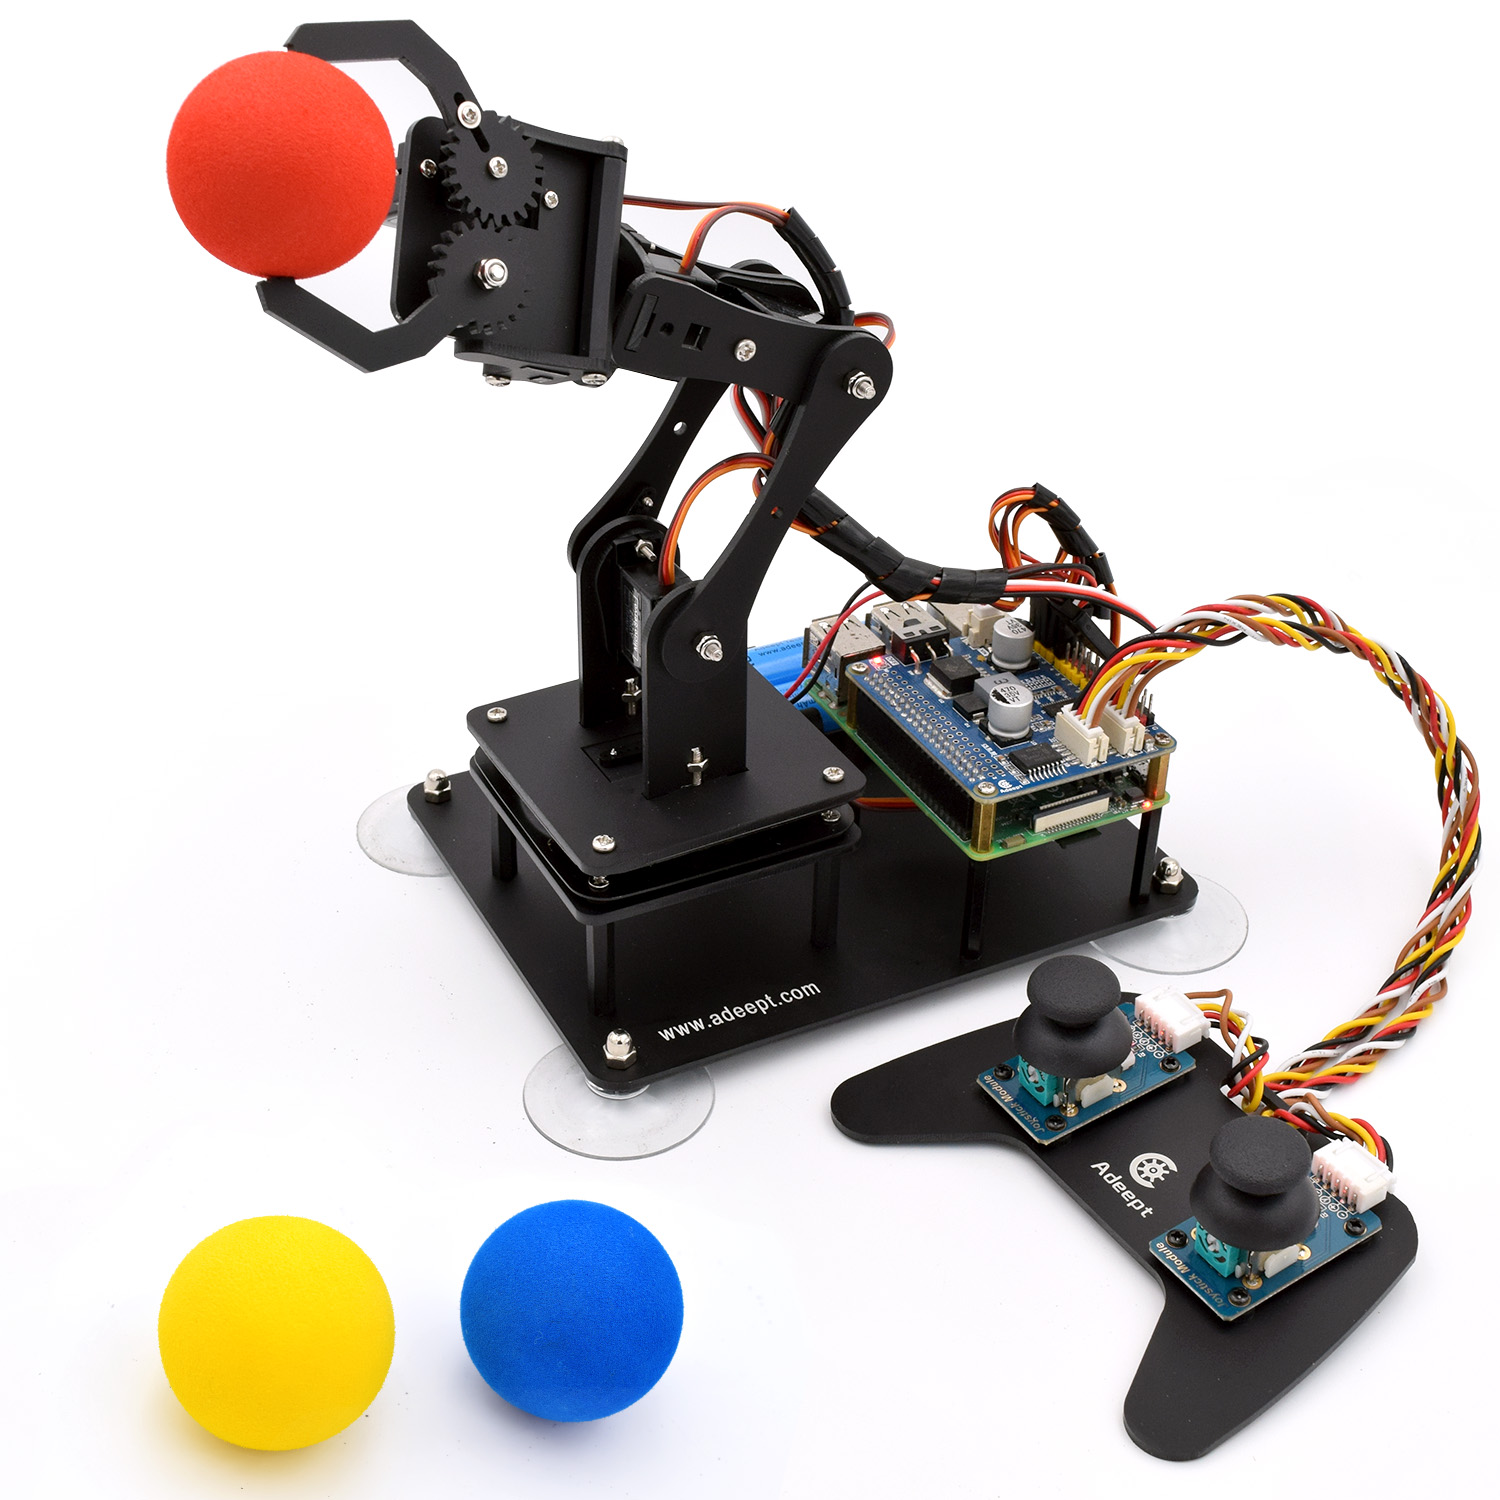 Adeept 5-DOF Robotic Arm Kit for Raspberry Pi 4 B 3 B+ B A+, Programmable DIY Coding STEM Educational 5 Axis Robot Arm with Python Code and Tutorials